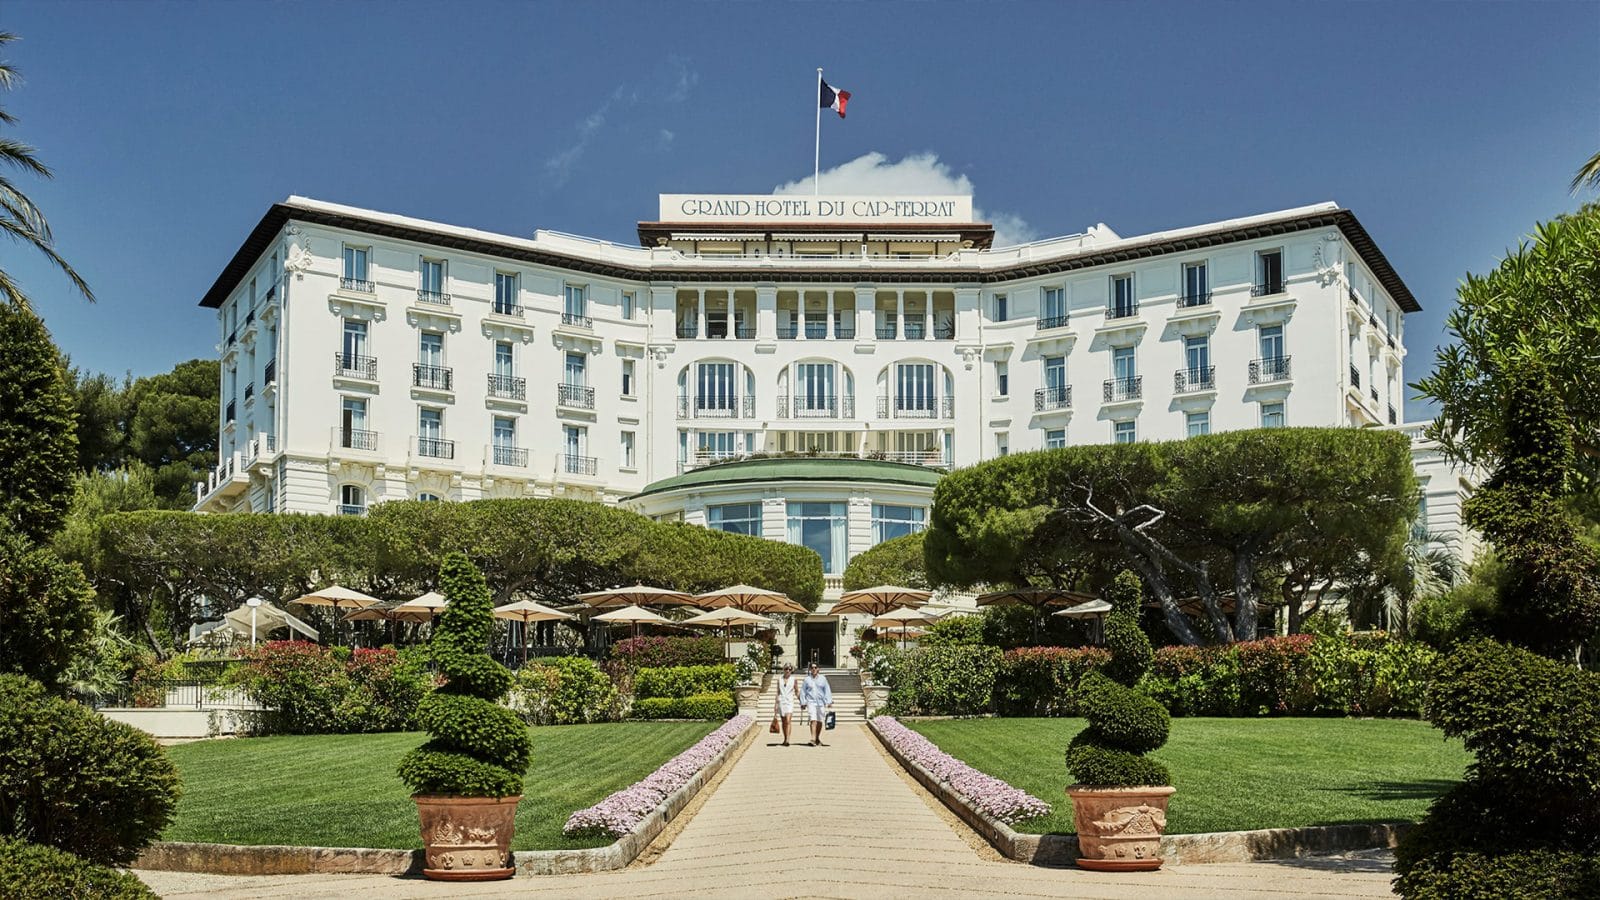 Grand Hotel Du Cap Ferrat 1600x900 